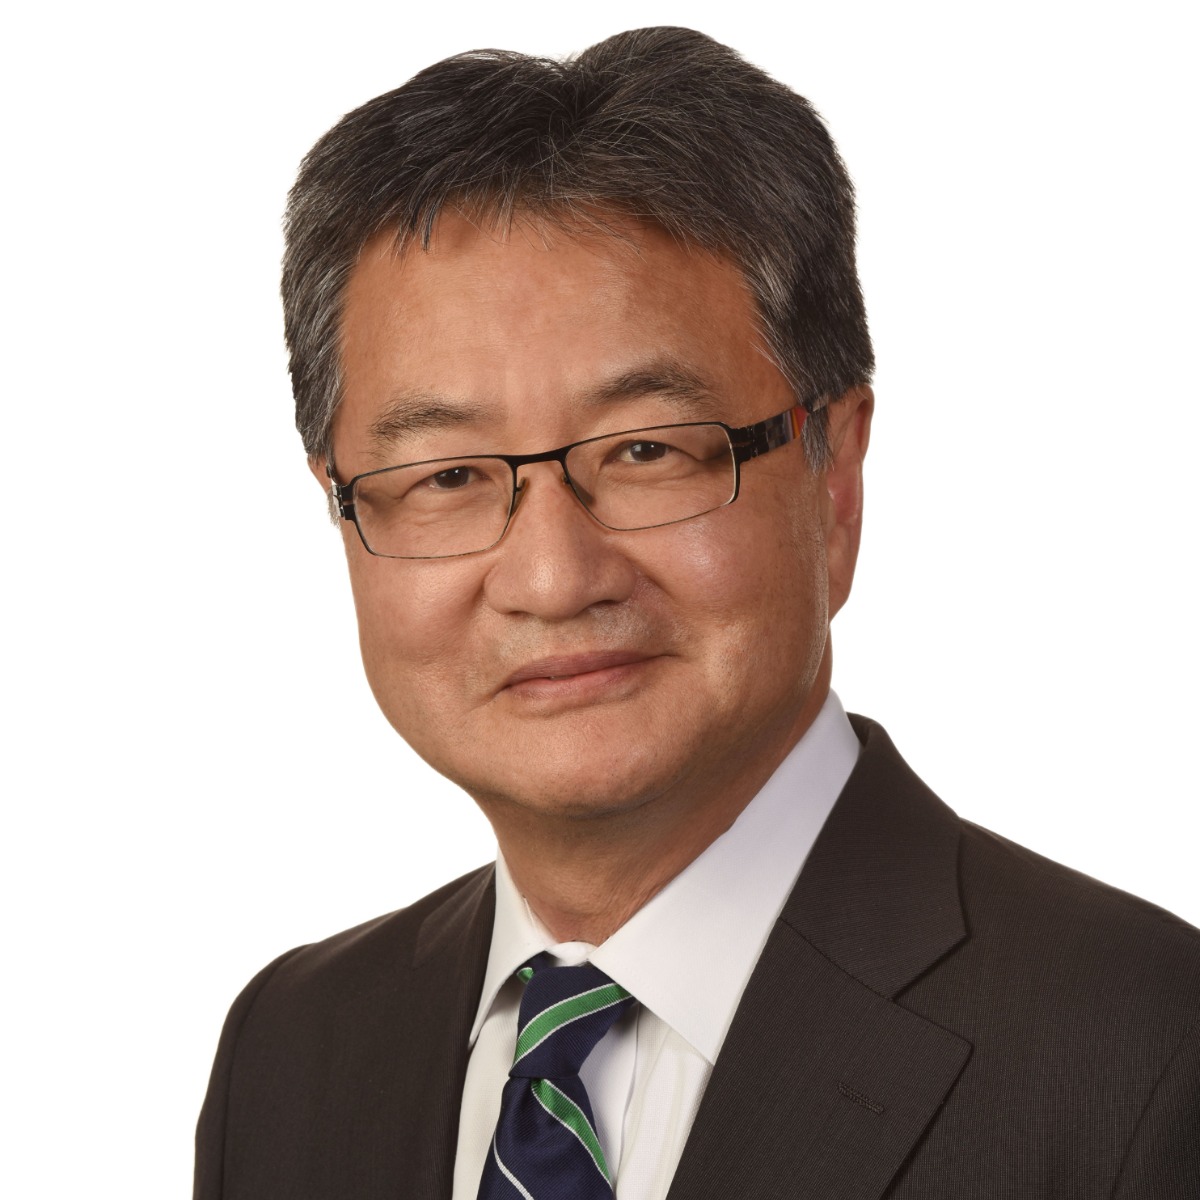 Ambassador Joseph Yun